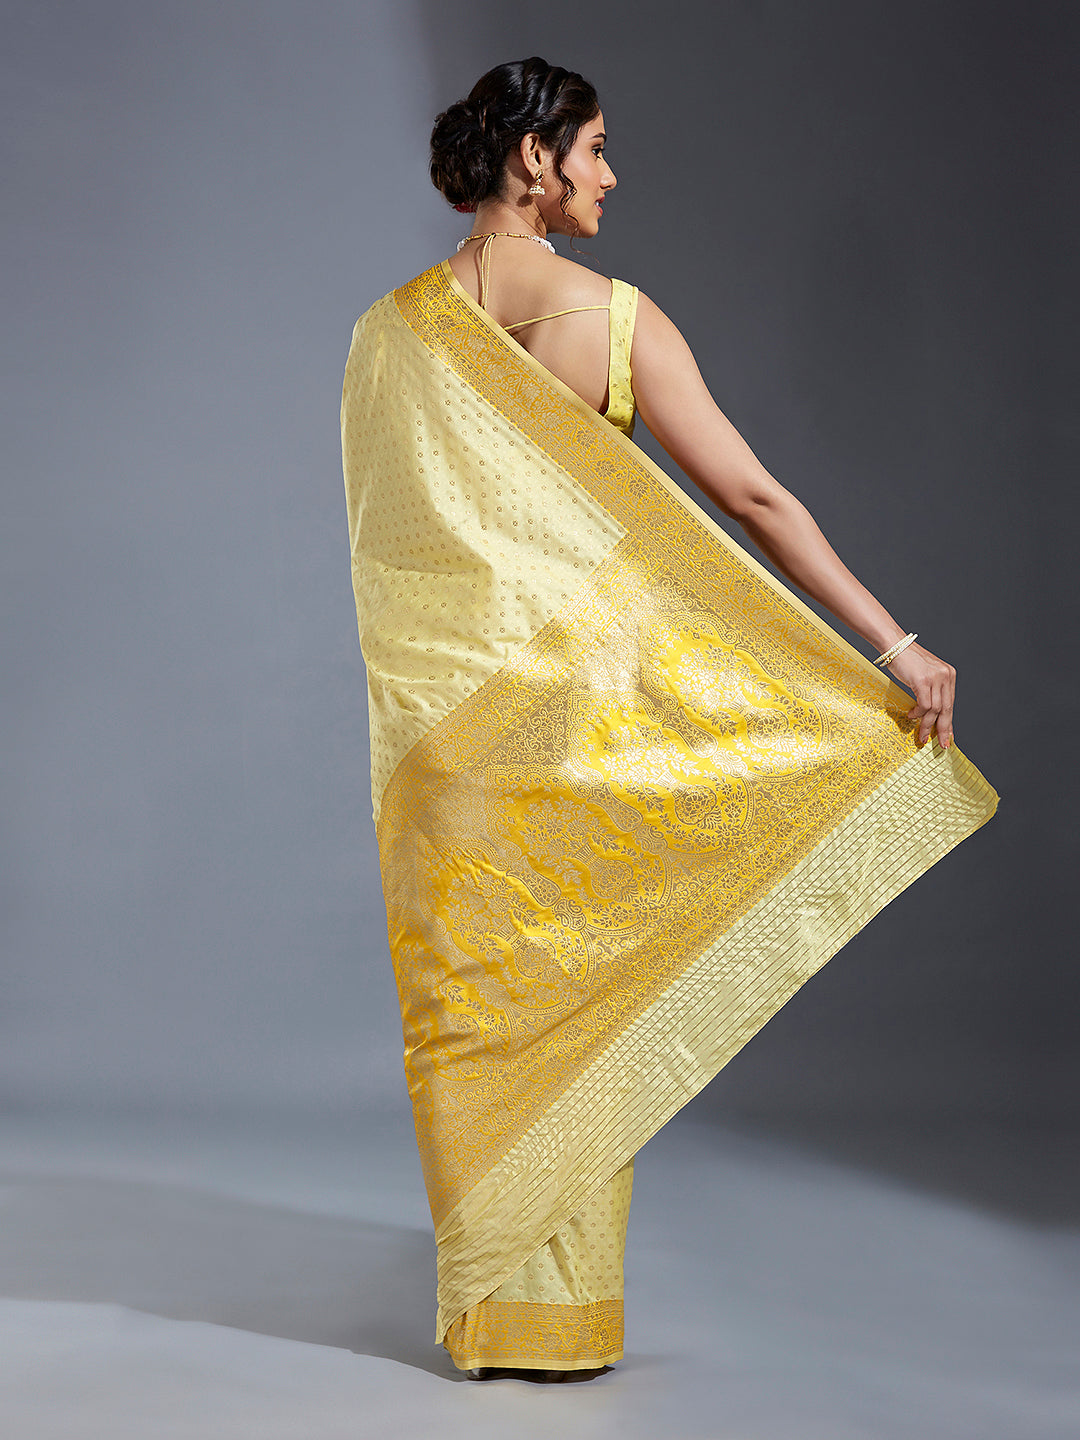 Women's Yellow & Gold Satin Paisley Zari With Beautiful Ethnic Motifs Banarasi Saree - Royal Dwells